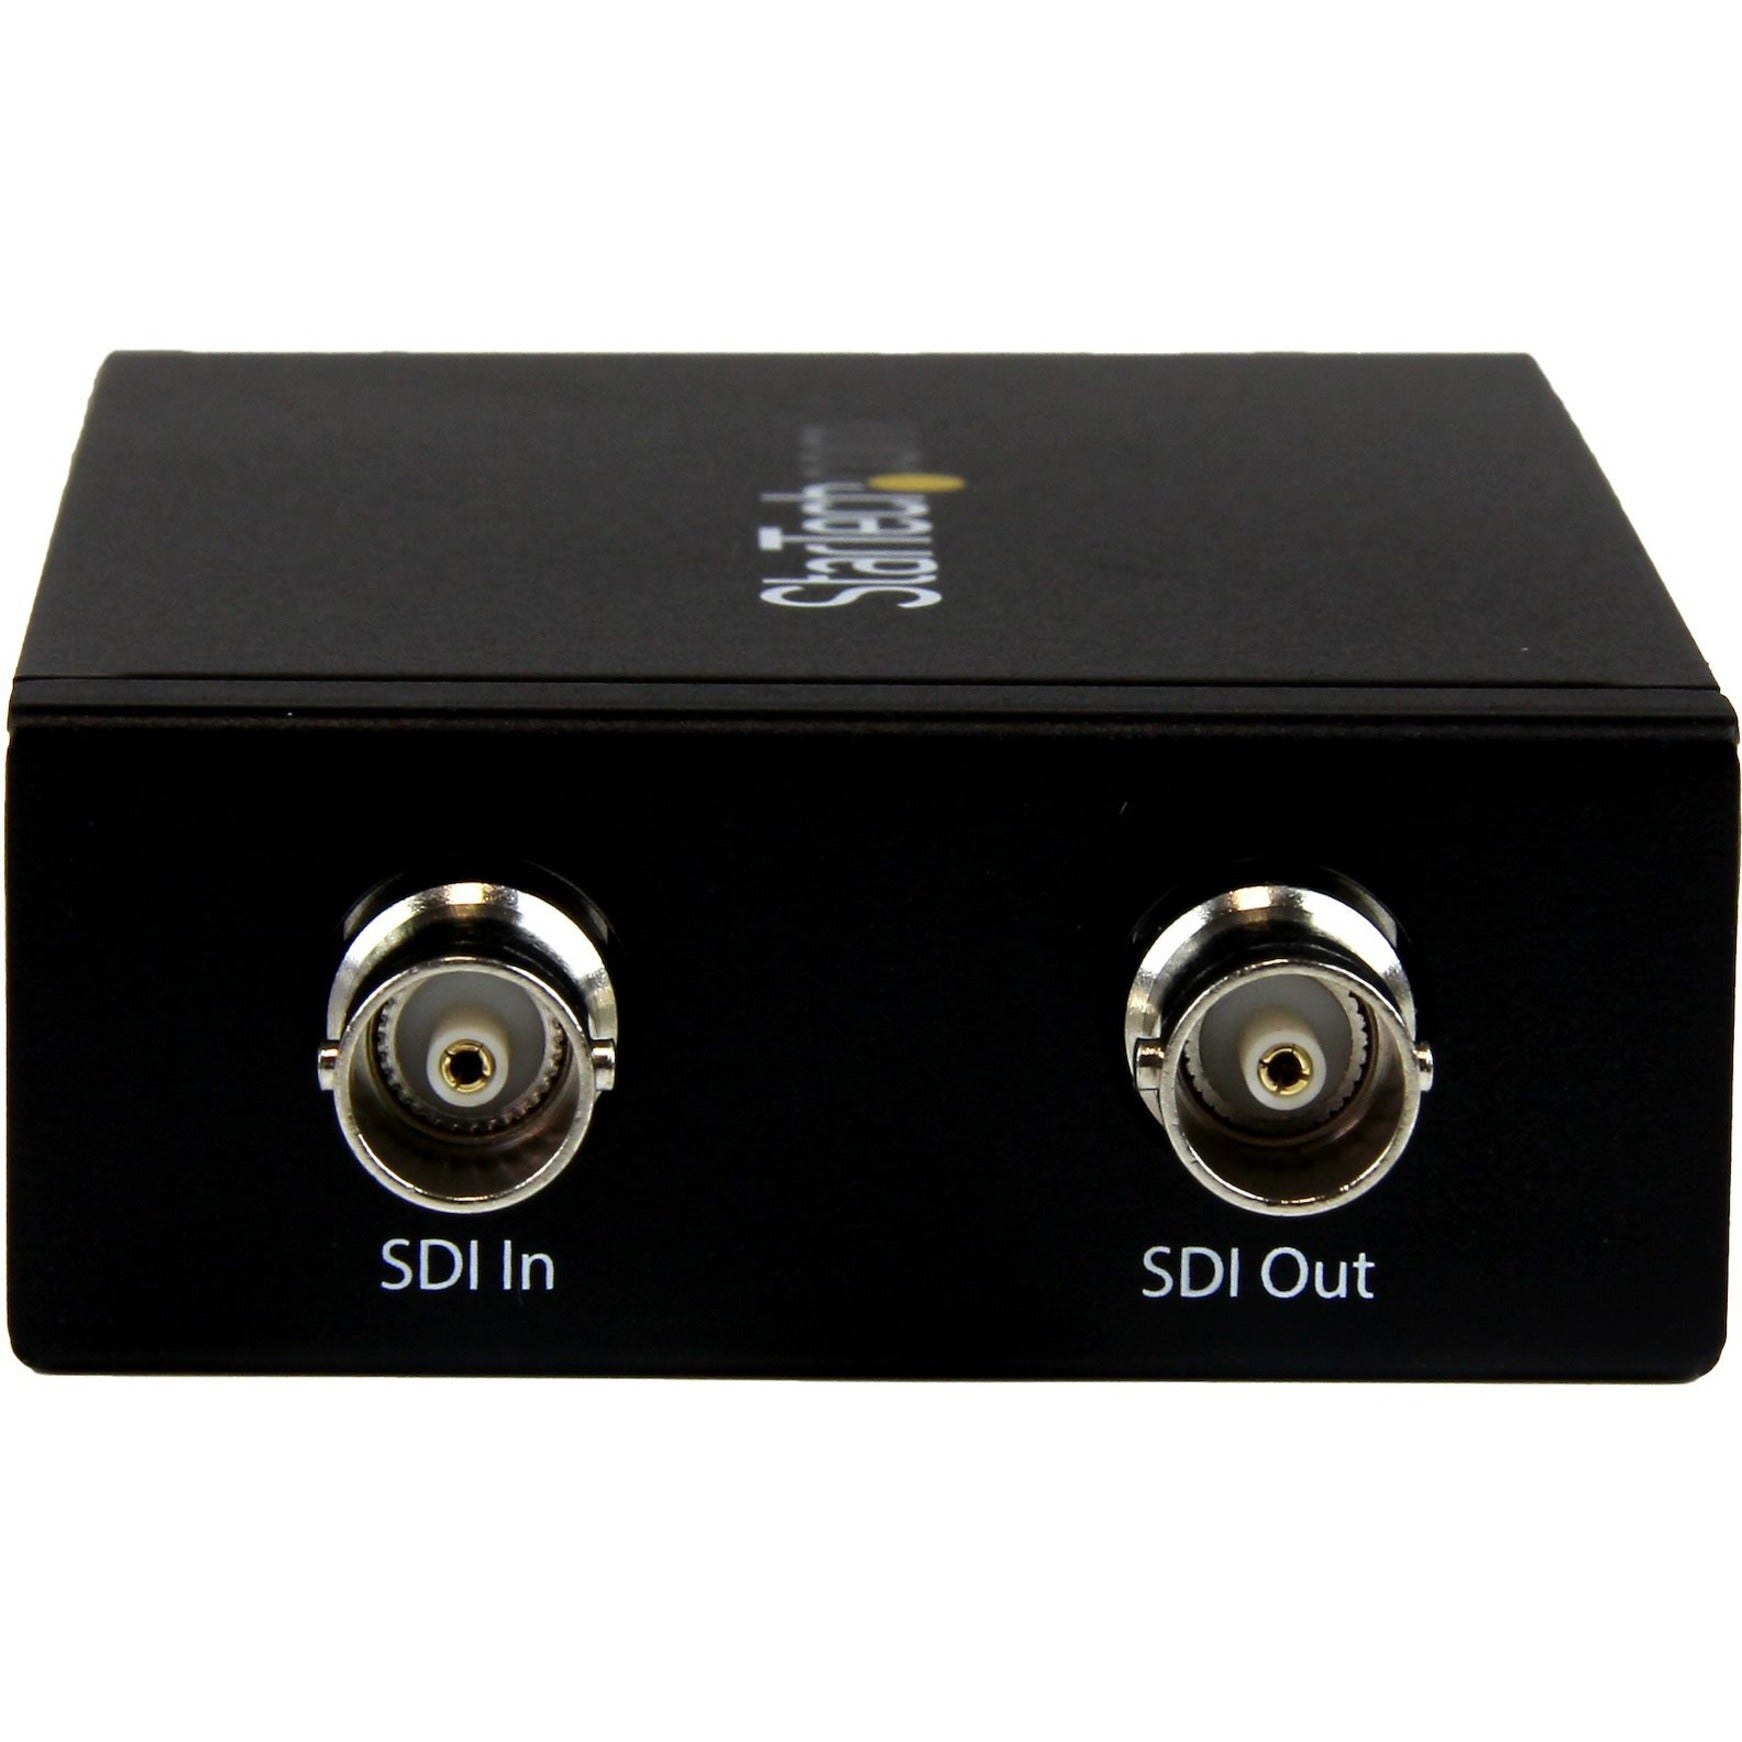 StarTech.com SDI2HD SDI to HDMI Converter - 3G SDI to HDMI Adapter with SDI Loop Through Output, Video Conversion, 1920 x 1200, 60 fps